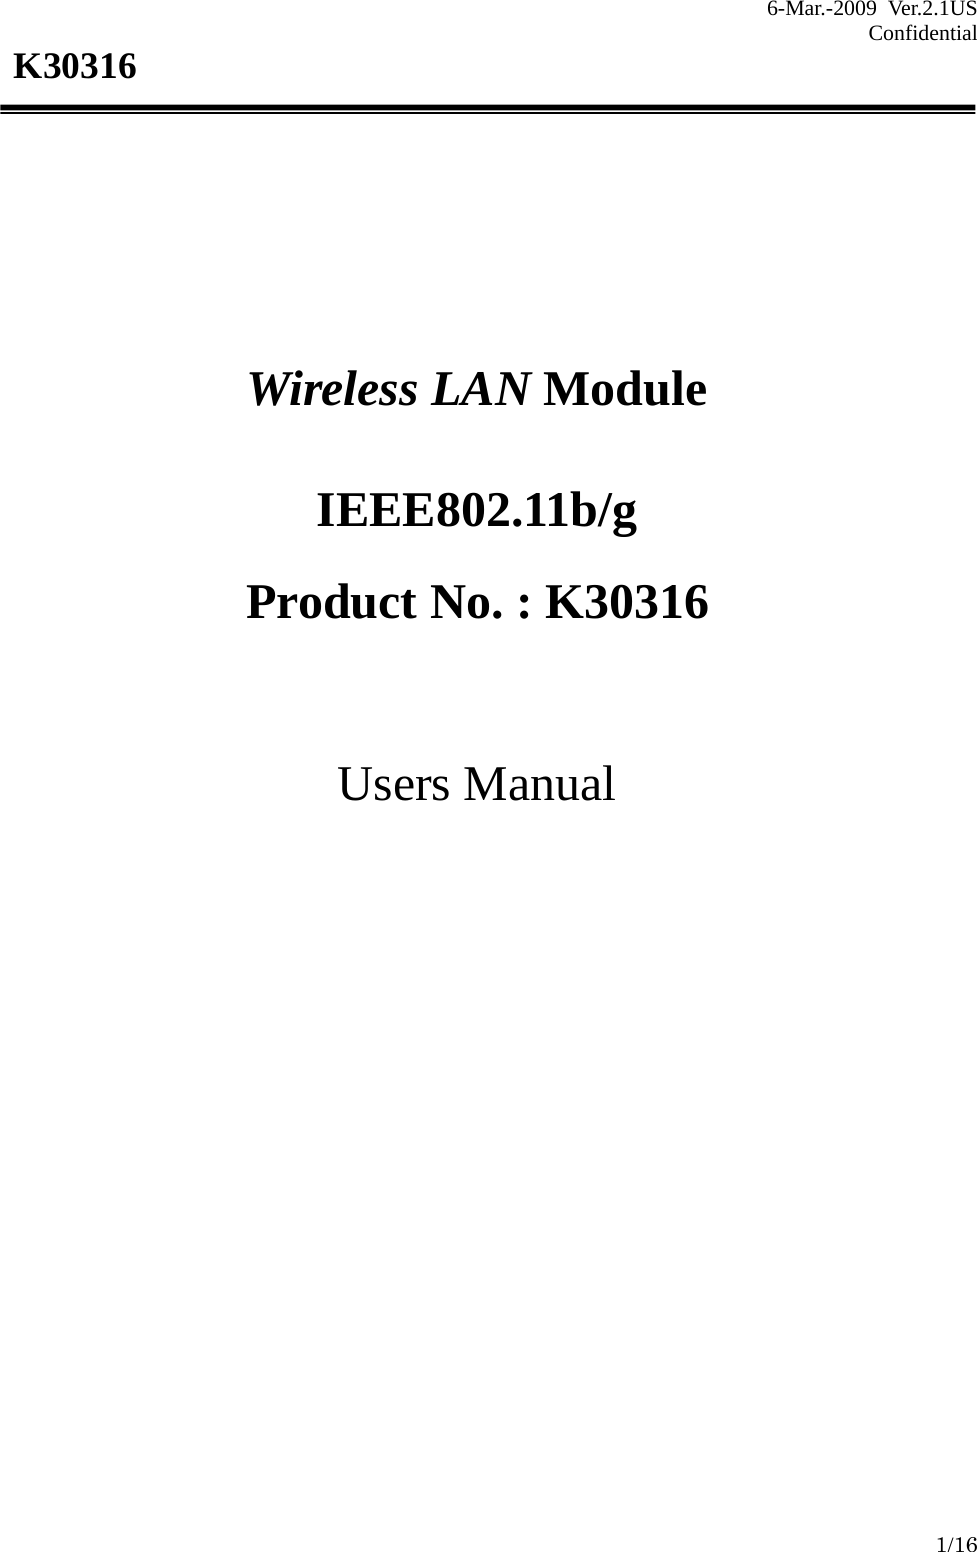 6-Mar.-2009 Ver.2.1US Confidential    1/16 K30316         Wireless LAN Module  IEEE802.11b/g  Product No. : K30316     Users Manual                      